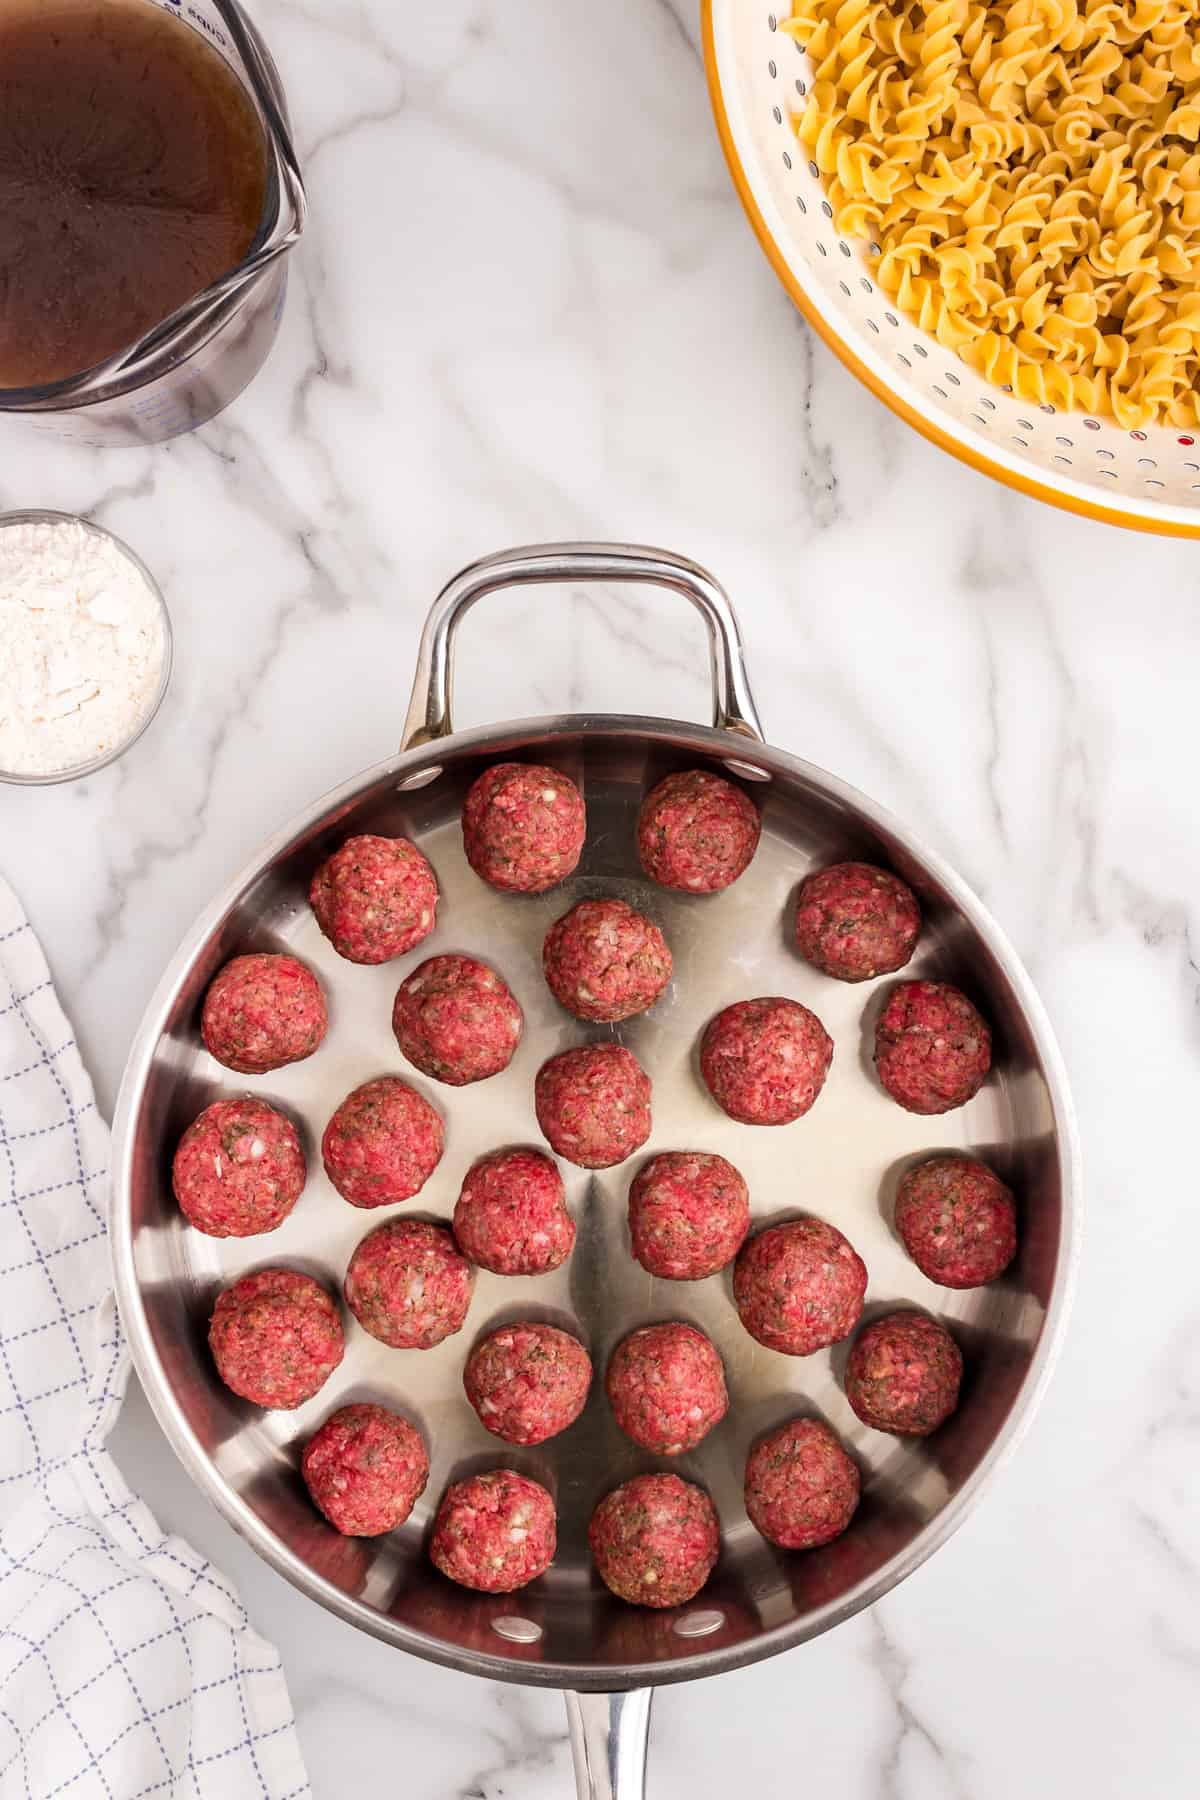 Meatballs in stovetop skillet for Swedish Meatball Casserole recipe